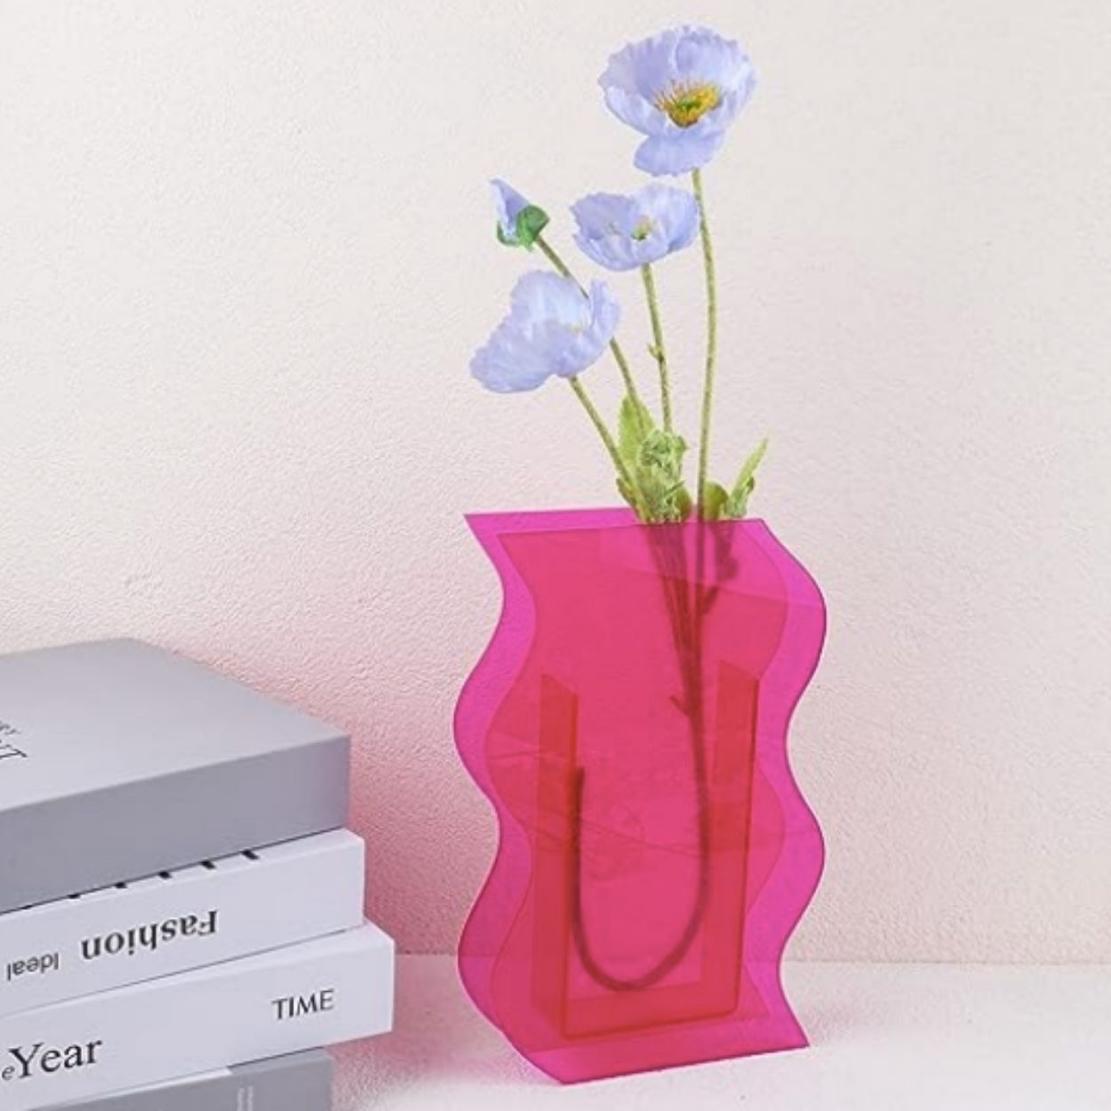 Pink, acrylic irregular vase with blue flowers